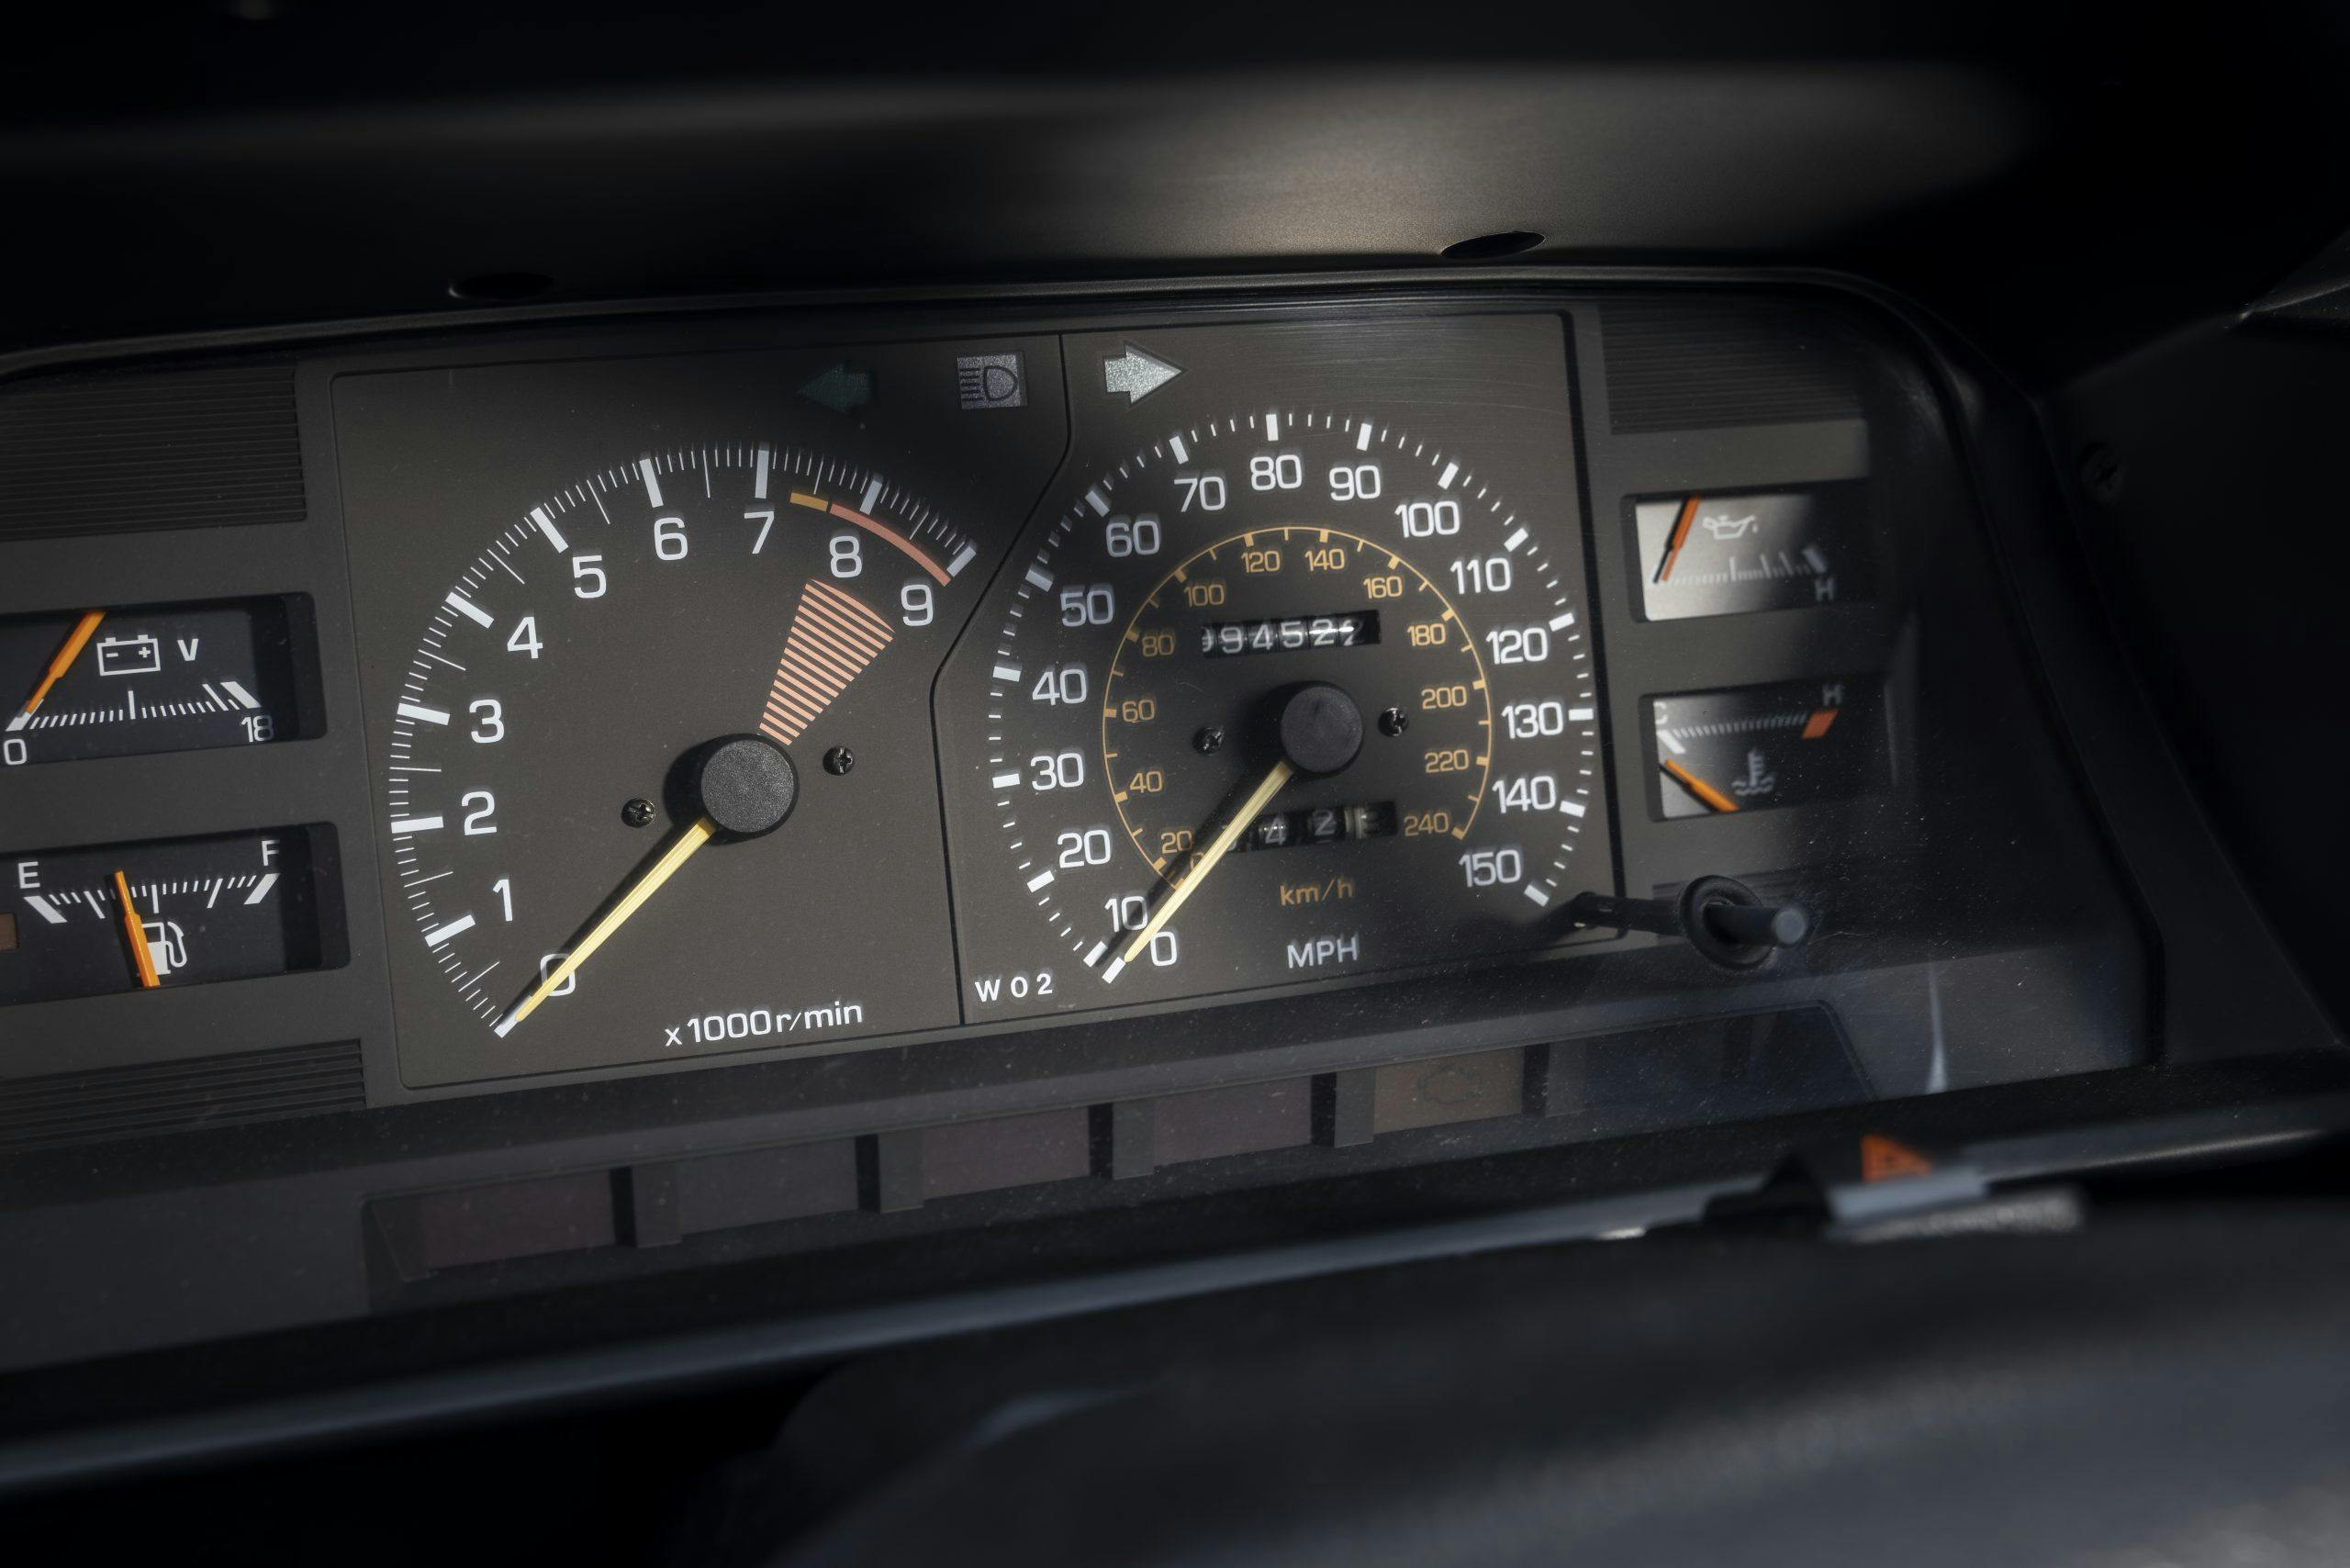 Toyota MR2 interior dash gauges